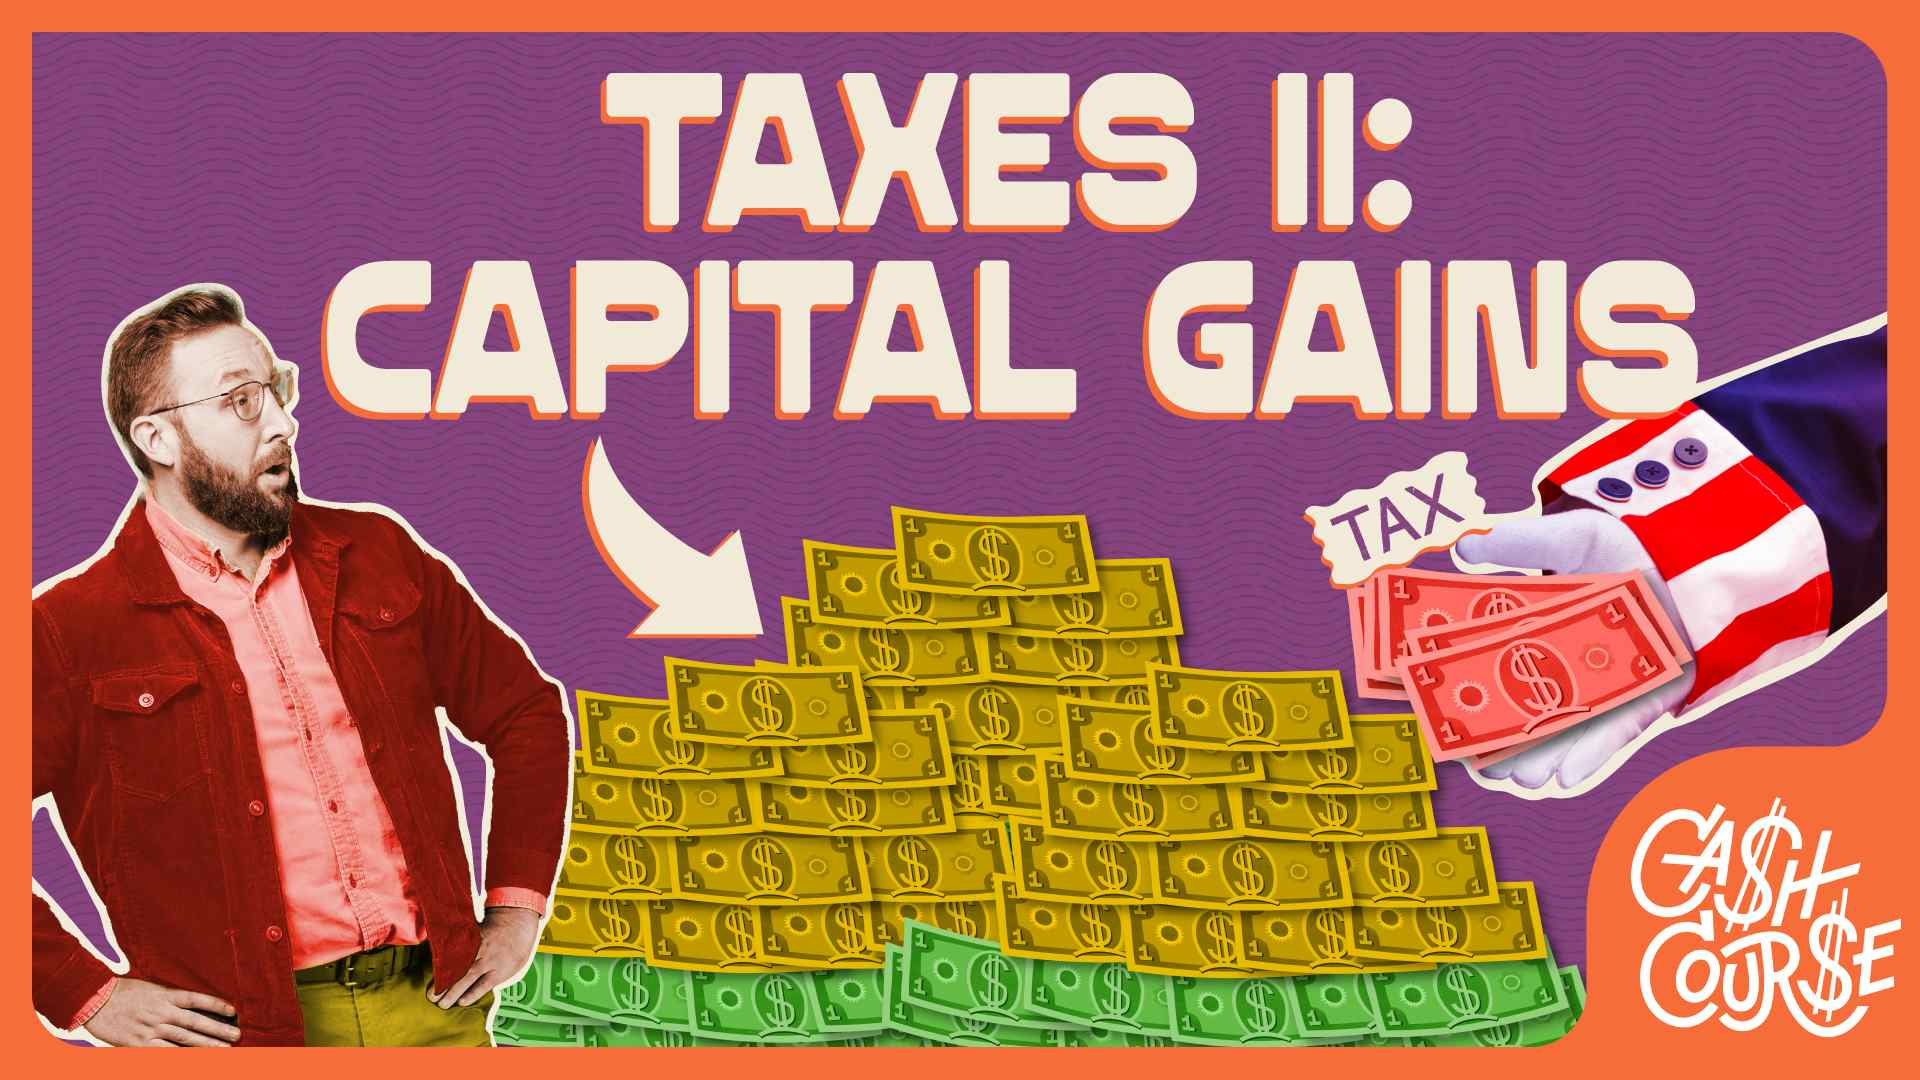 Taxes II: Capital Gains